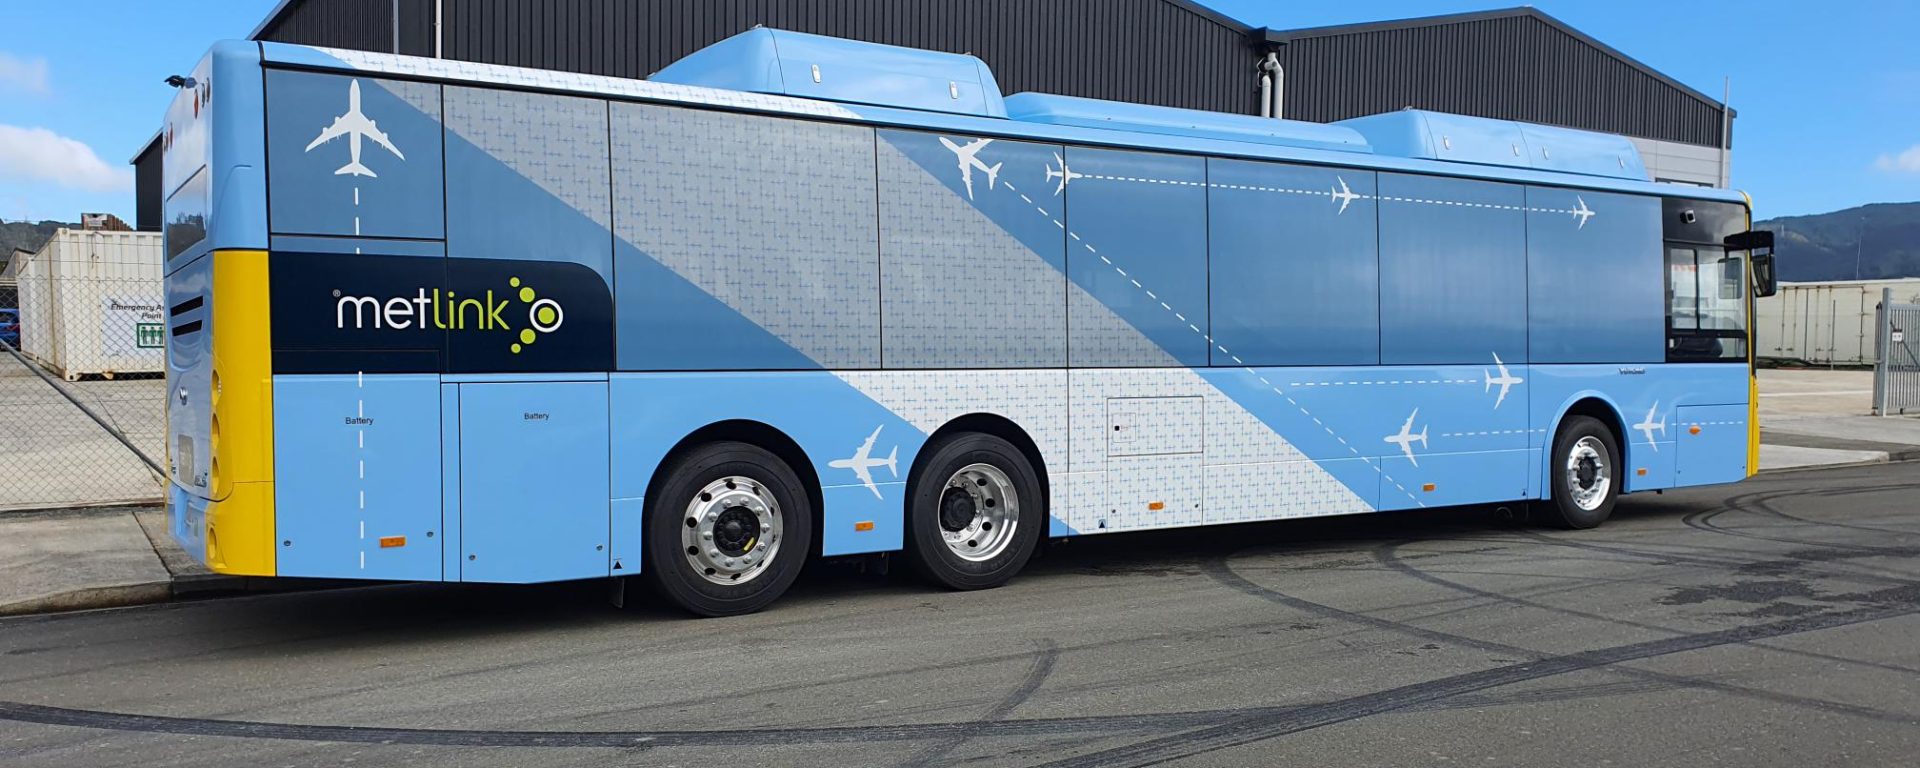 Metlink Airport Express bus in Wellington